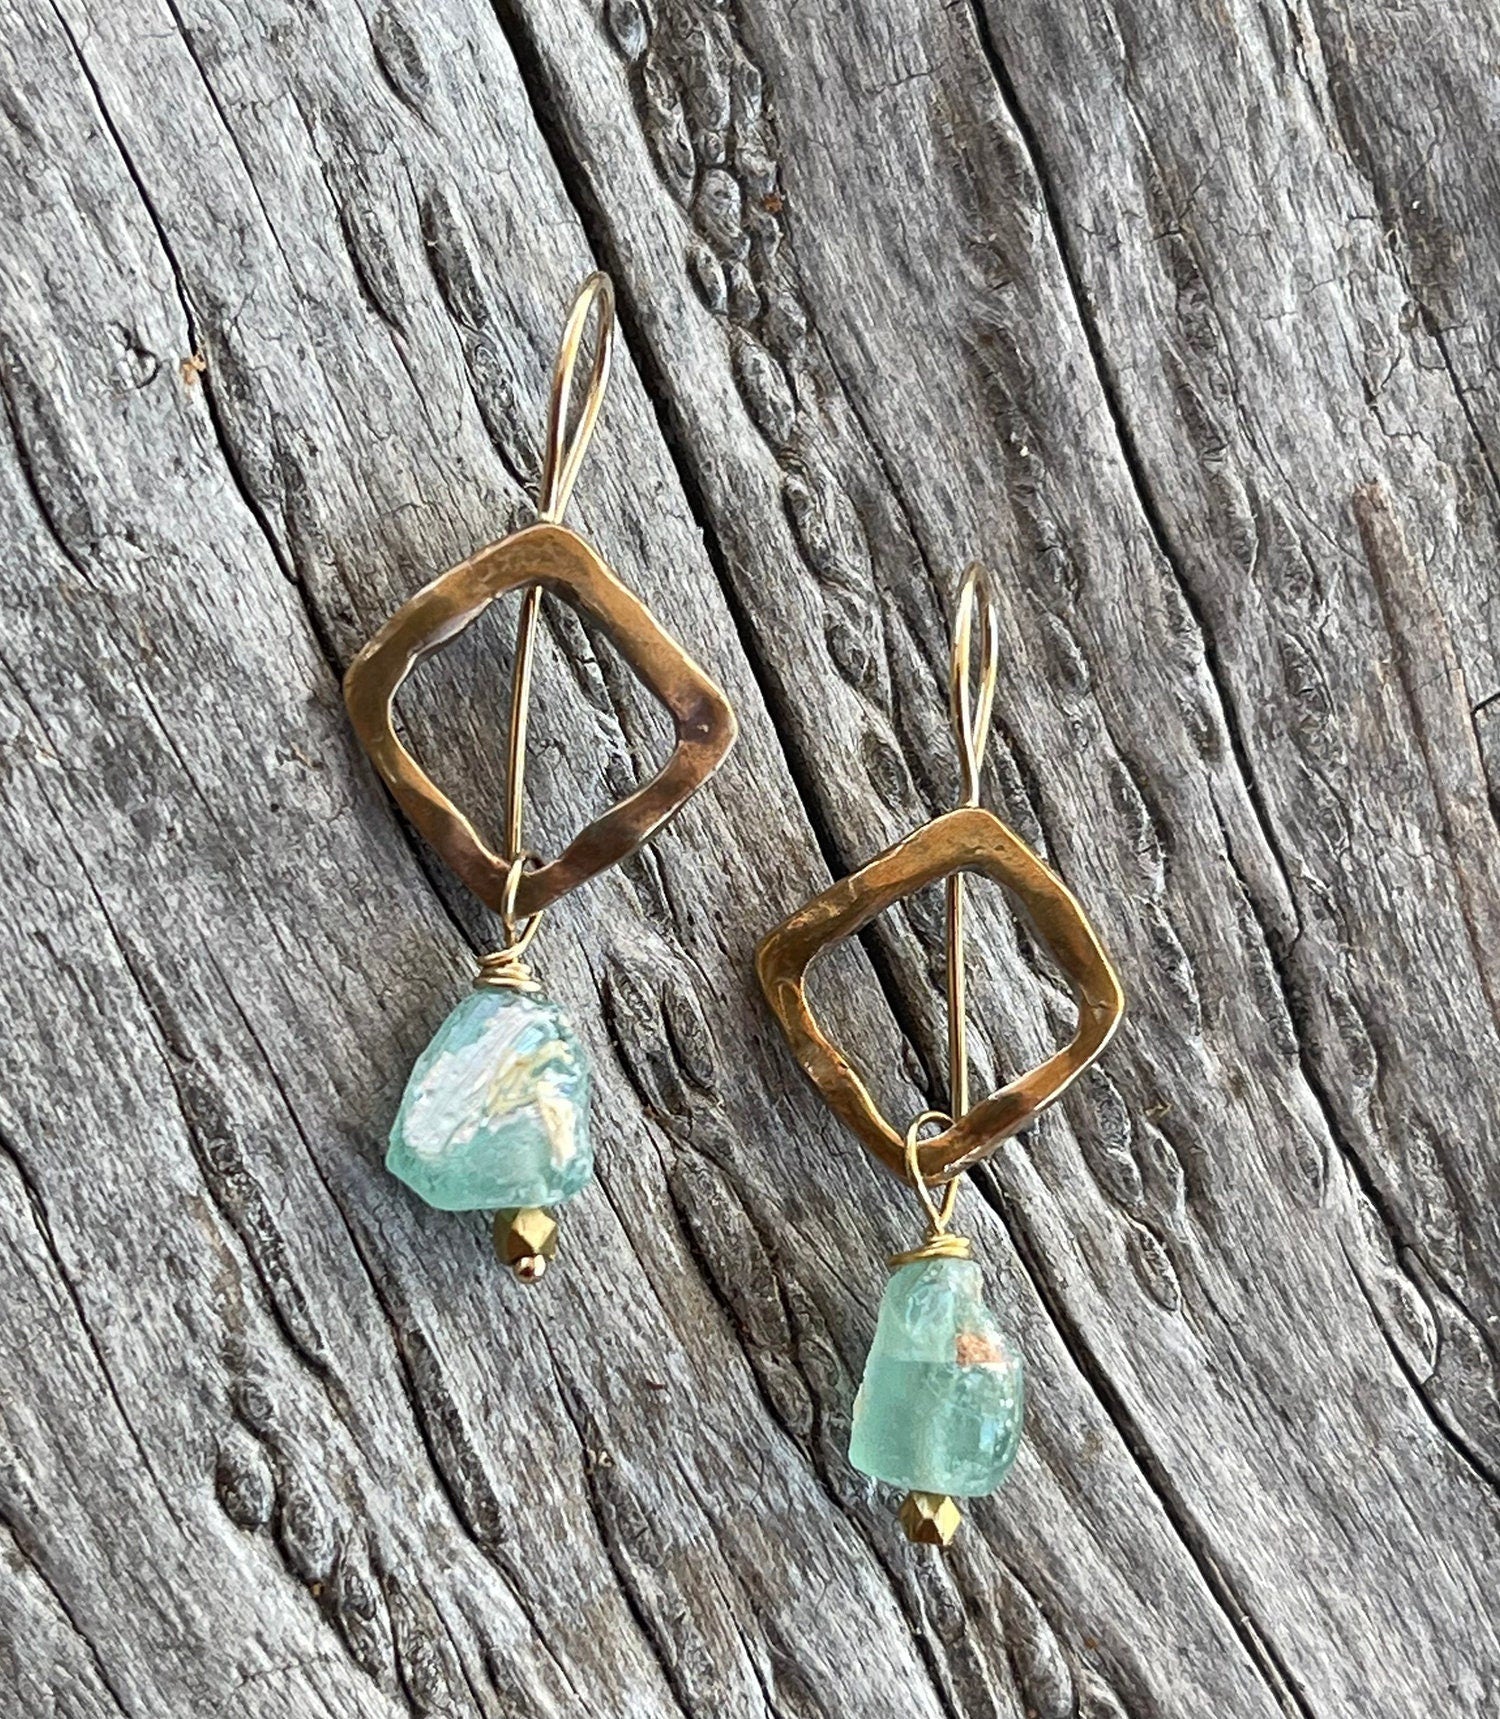 Bronze Organic Square Earrings with 14K GF Ear Wire Roman Glass Drop